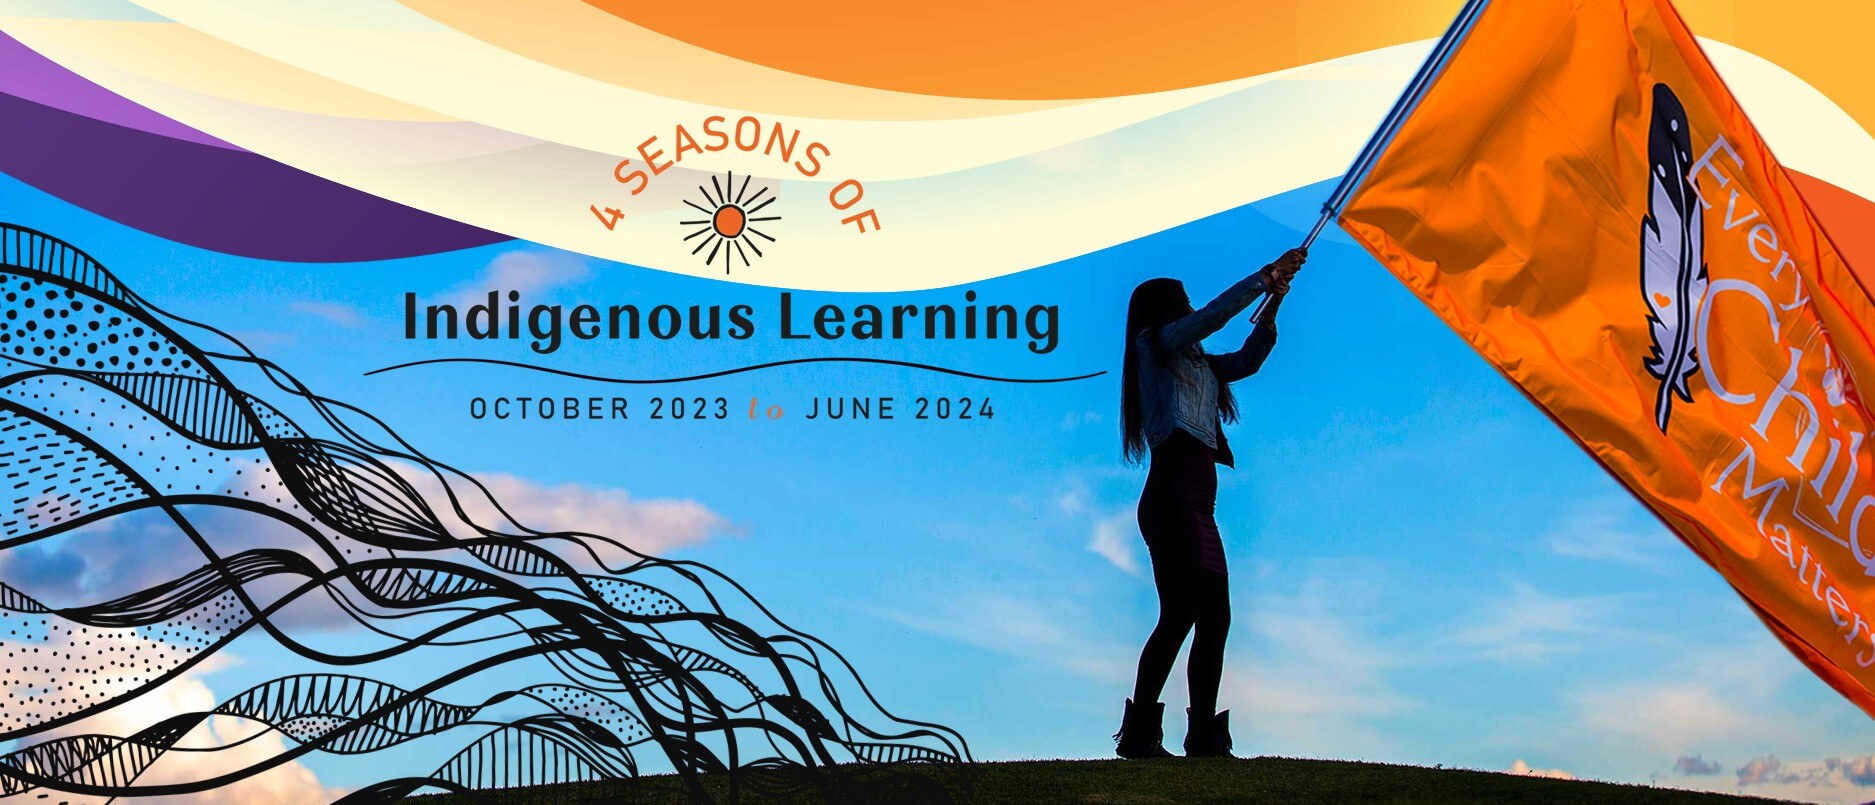 4 Seasons of Indigenous Learning